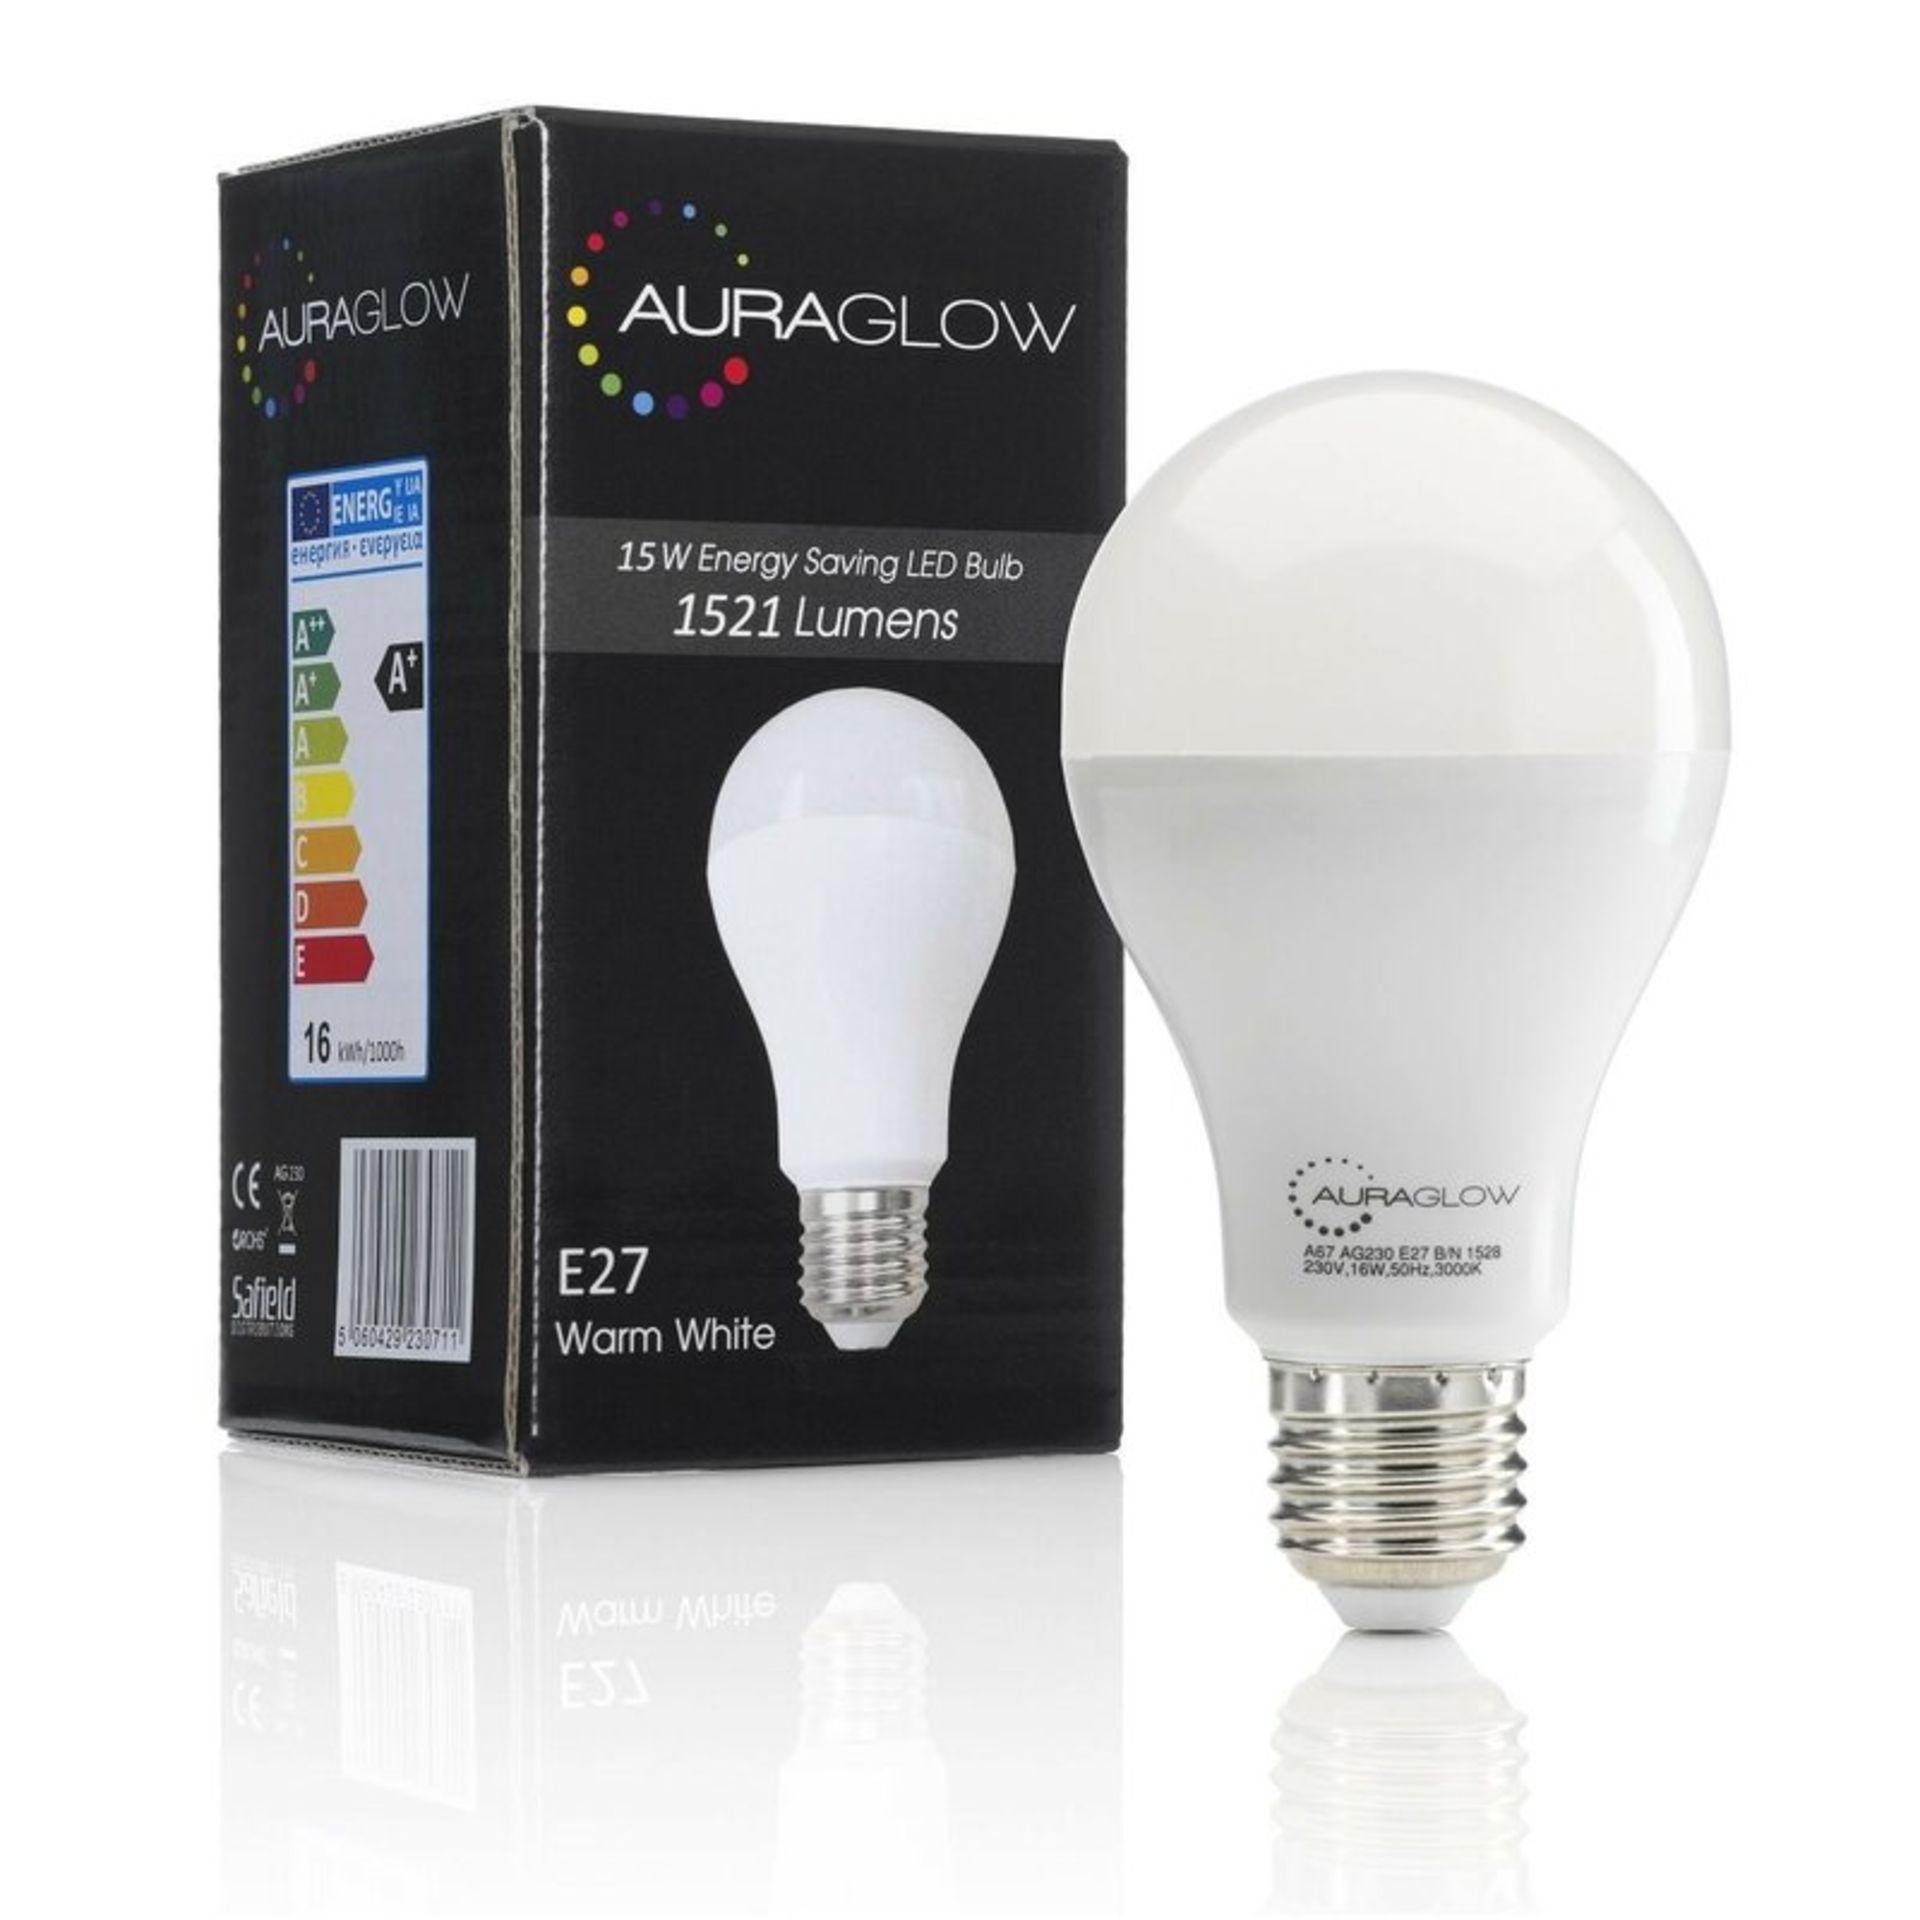 2 x Furlow 15W E27 LED Light Bulbs by Symple Stuff